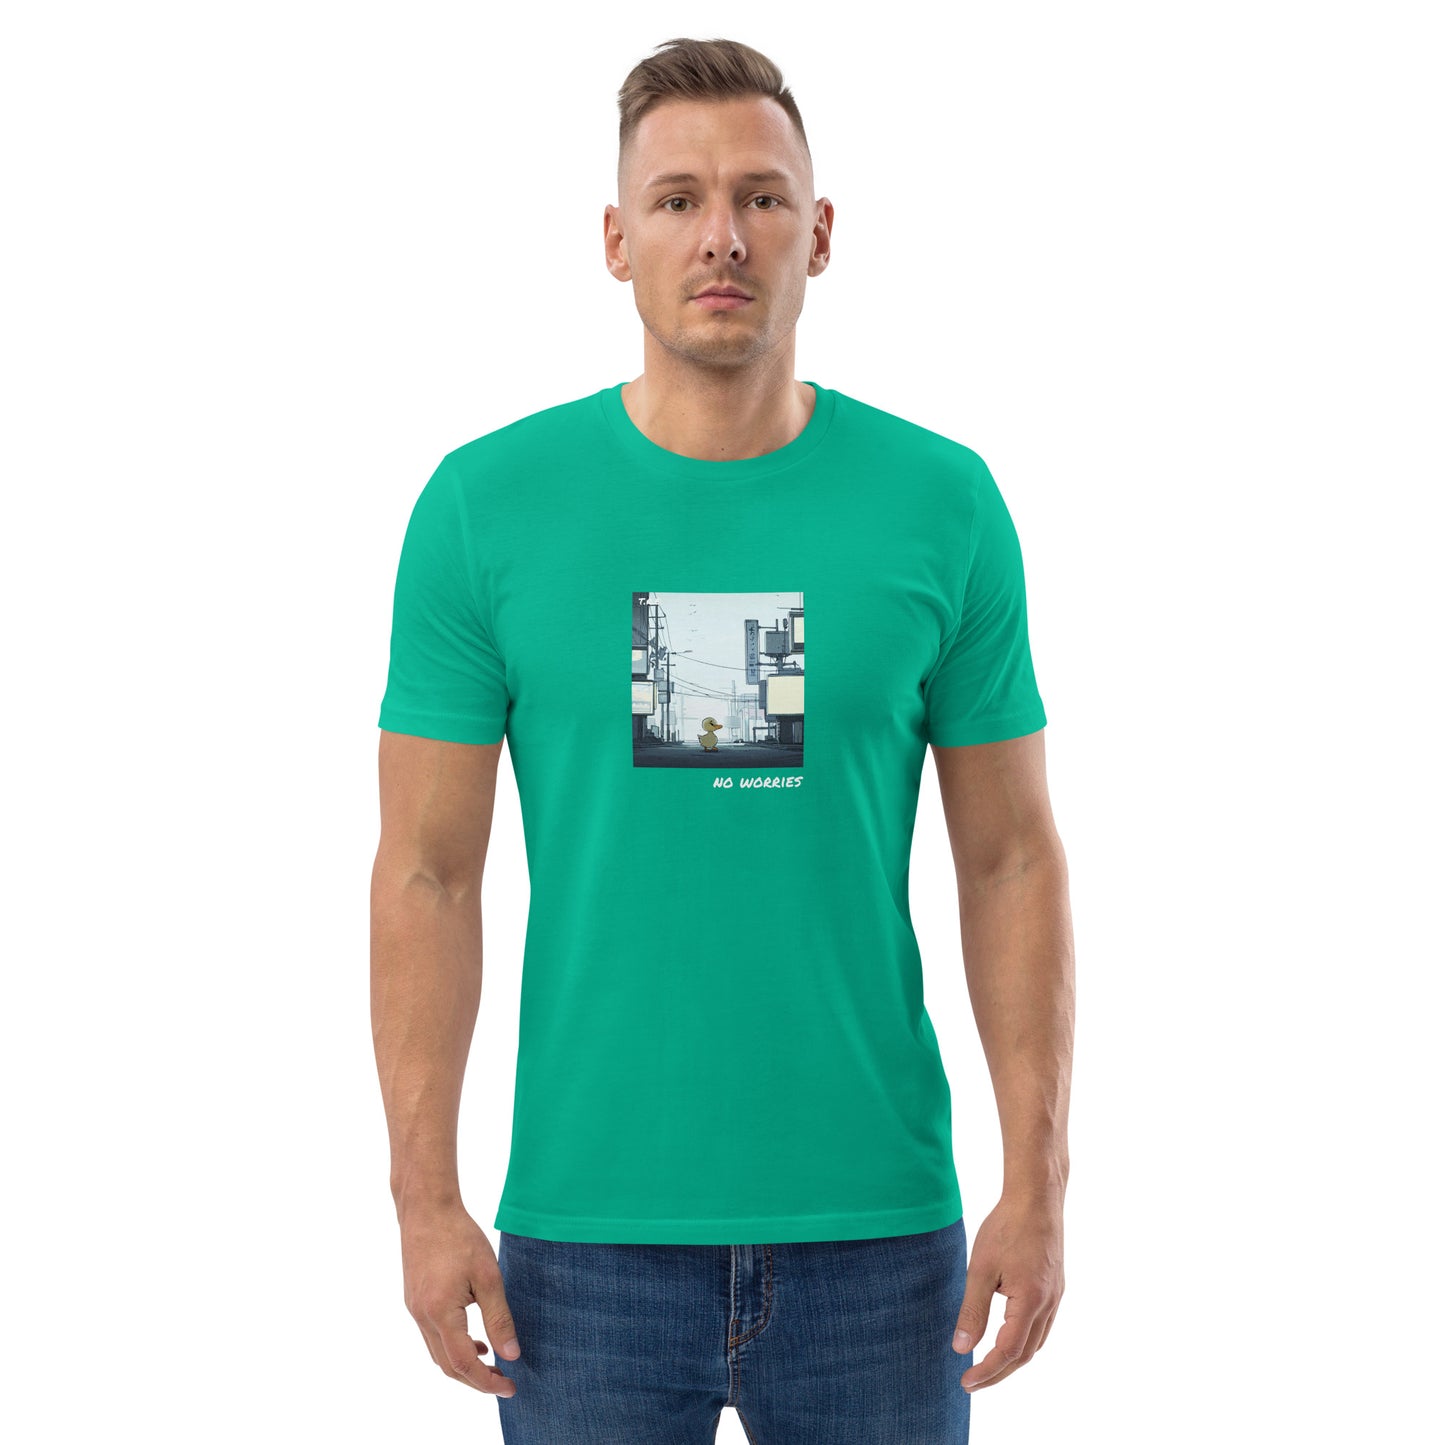 Unisex Organic Cotton T-Shirt - No Worries